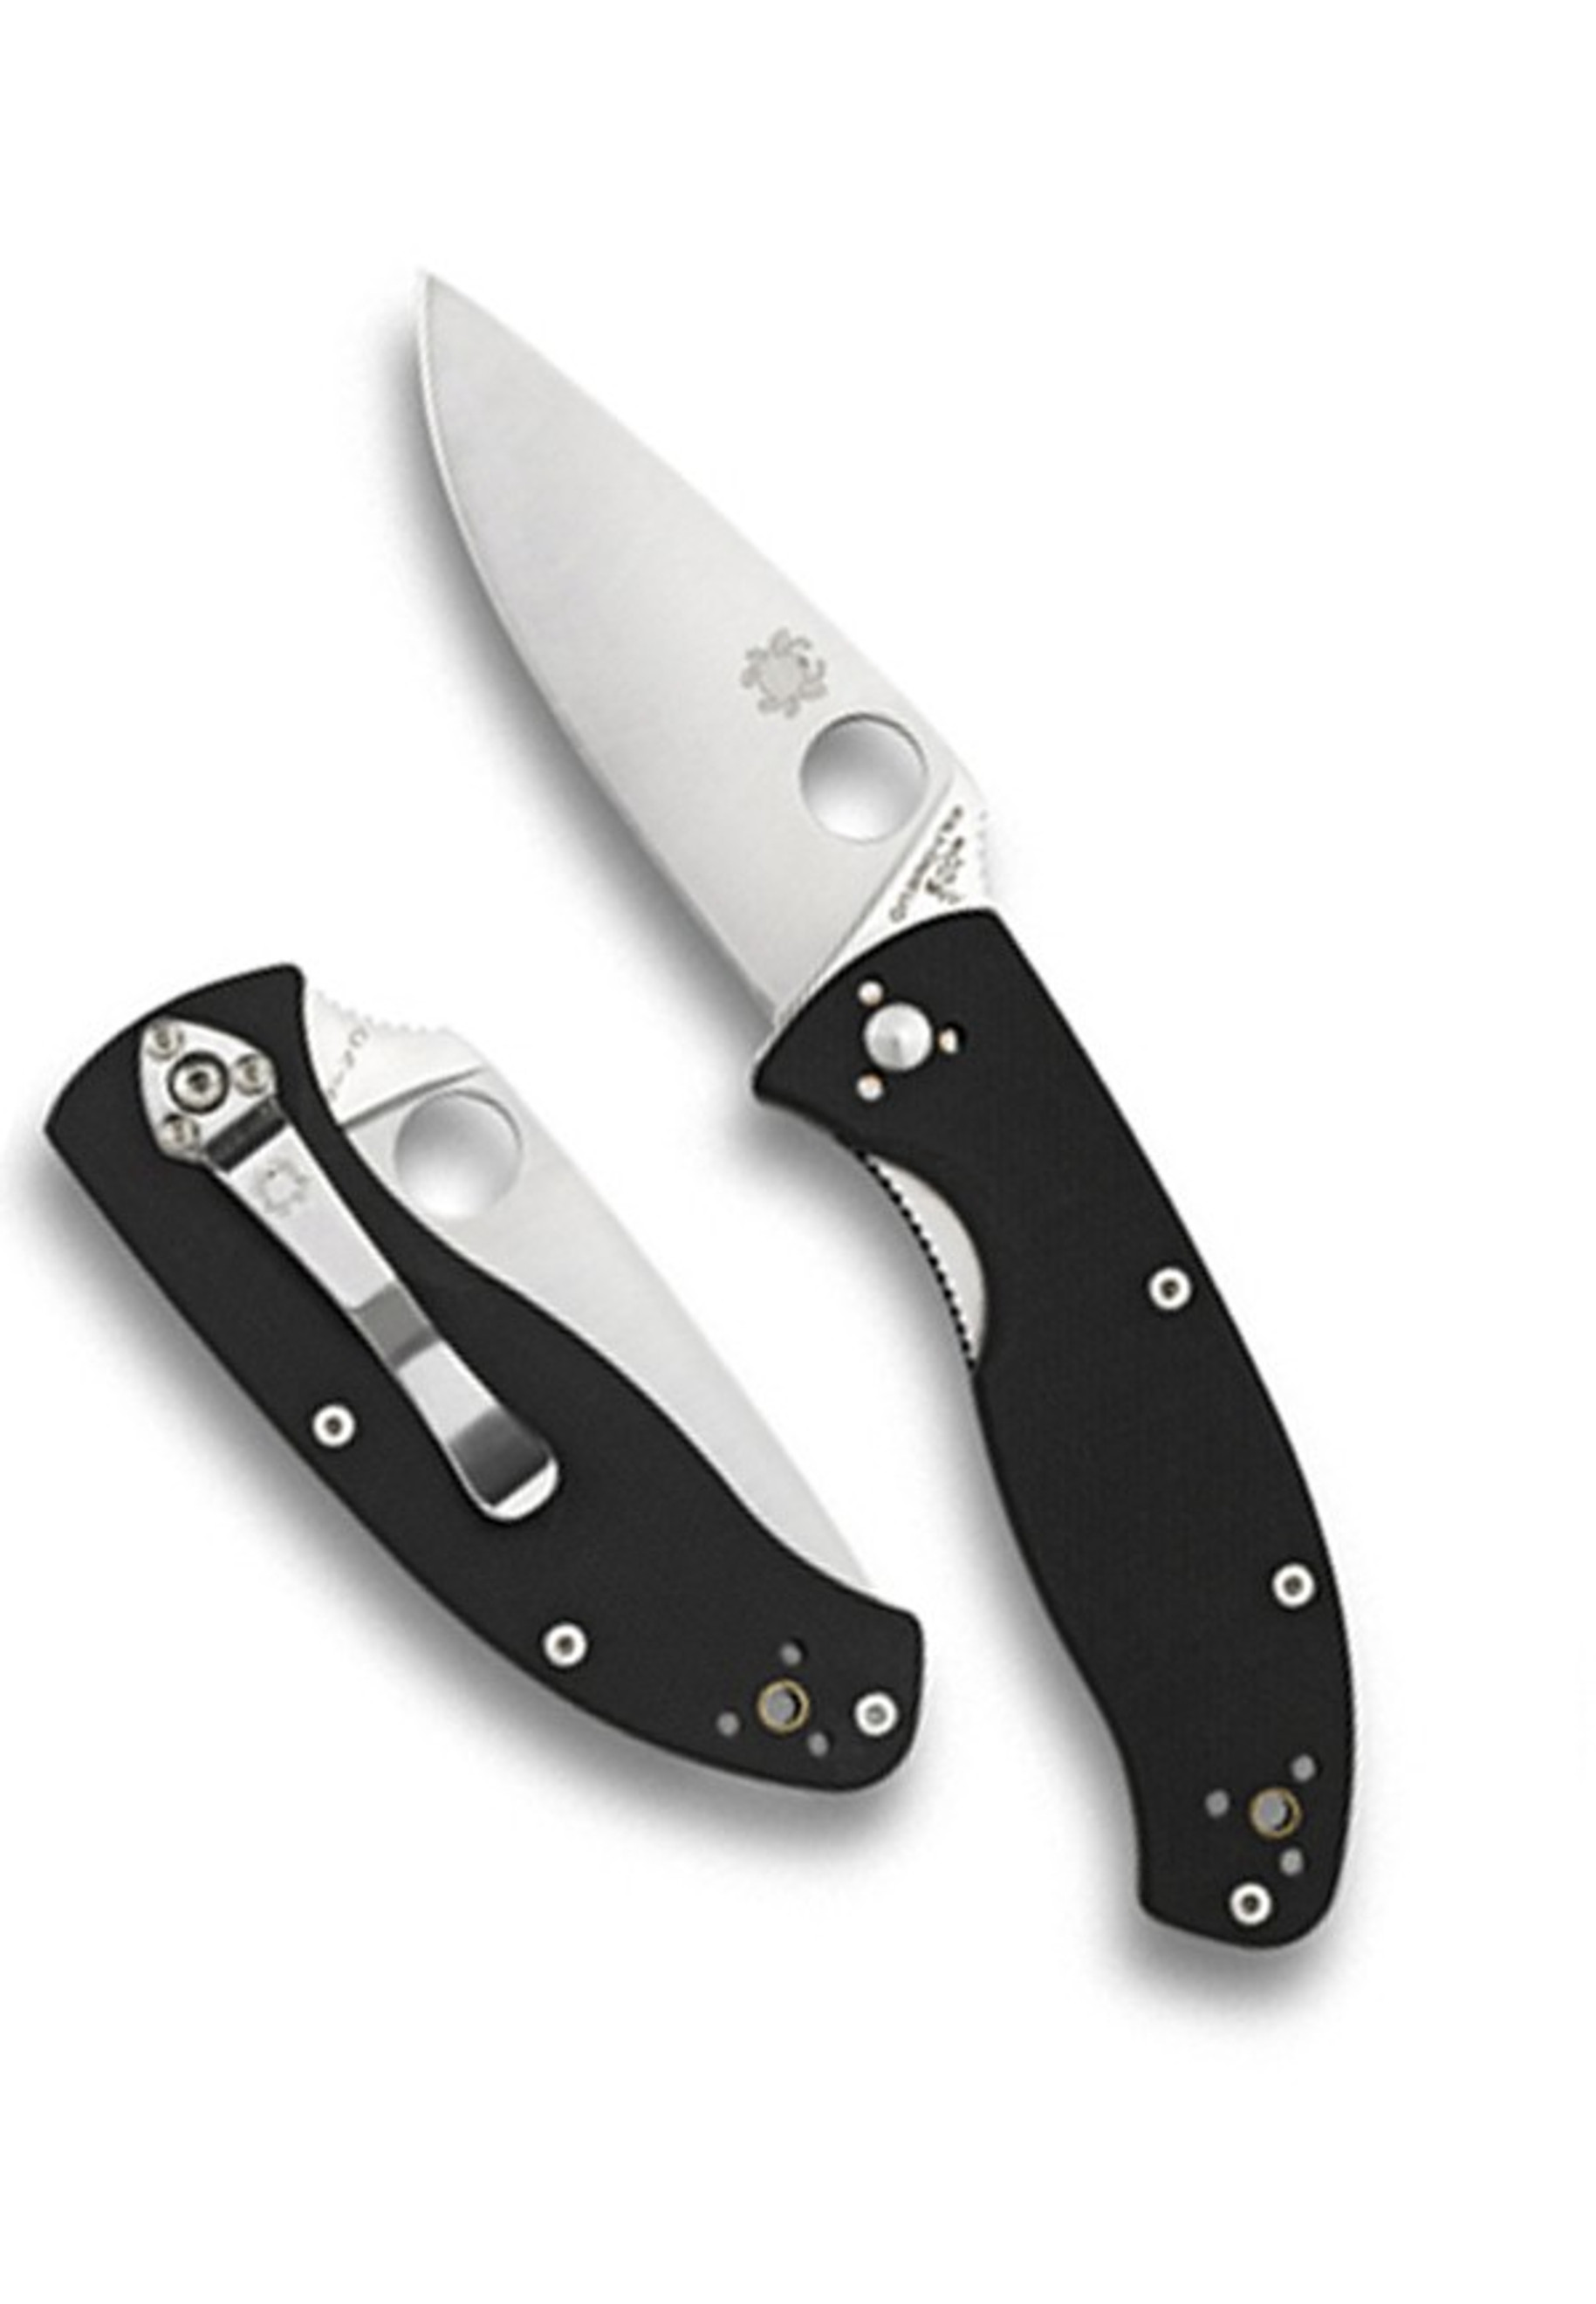 Spyderco Tenacious G-10 Combination Edge Folding Knife